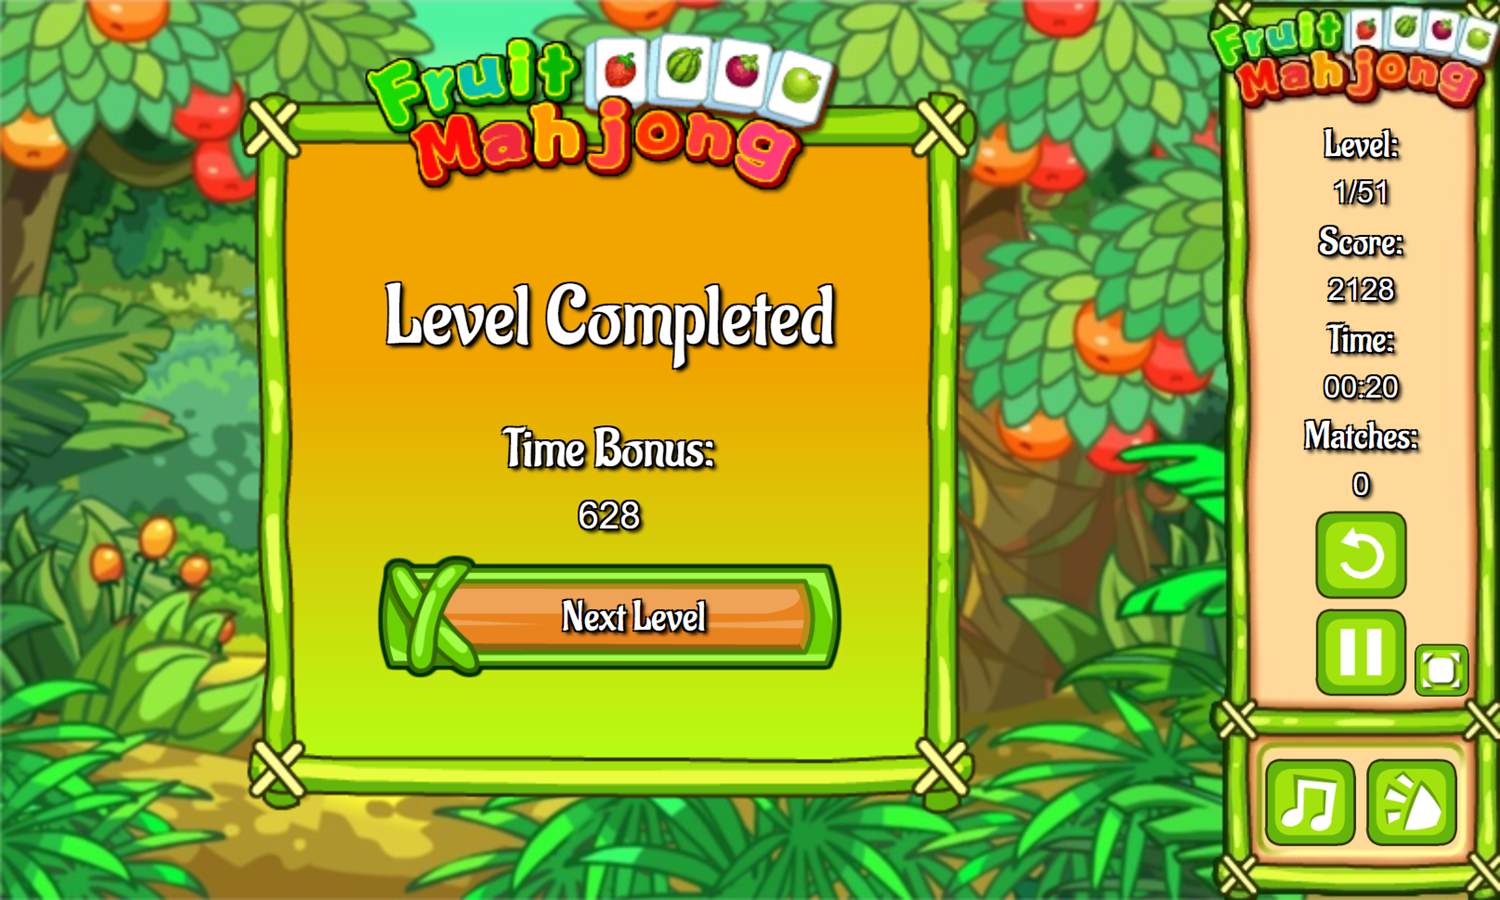 Fruit Mahjong Game Level Completed Screenshot.